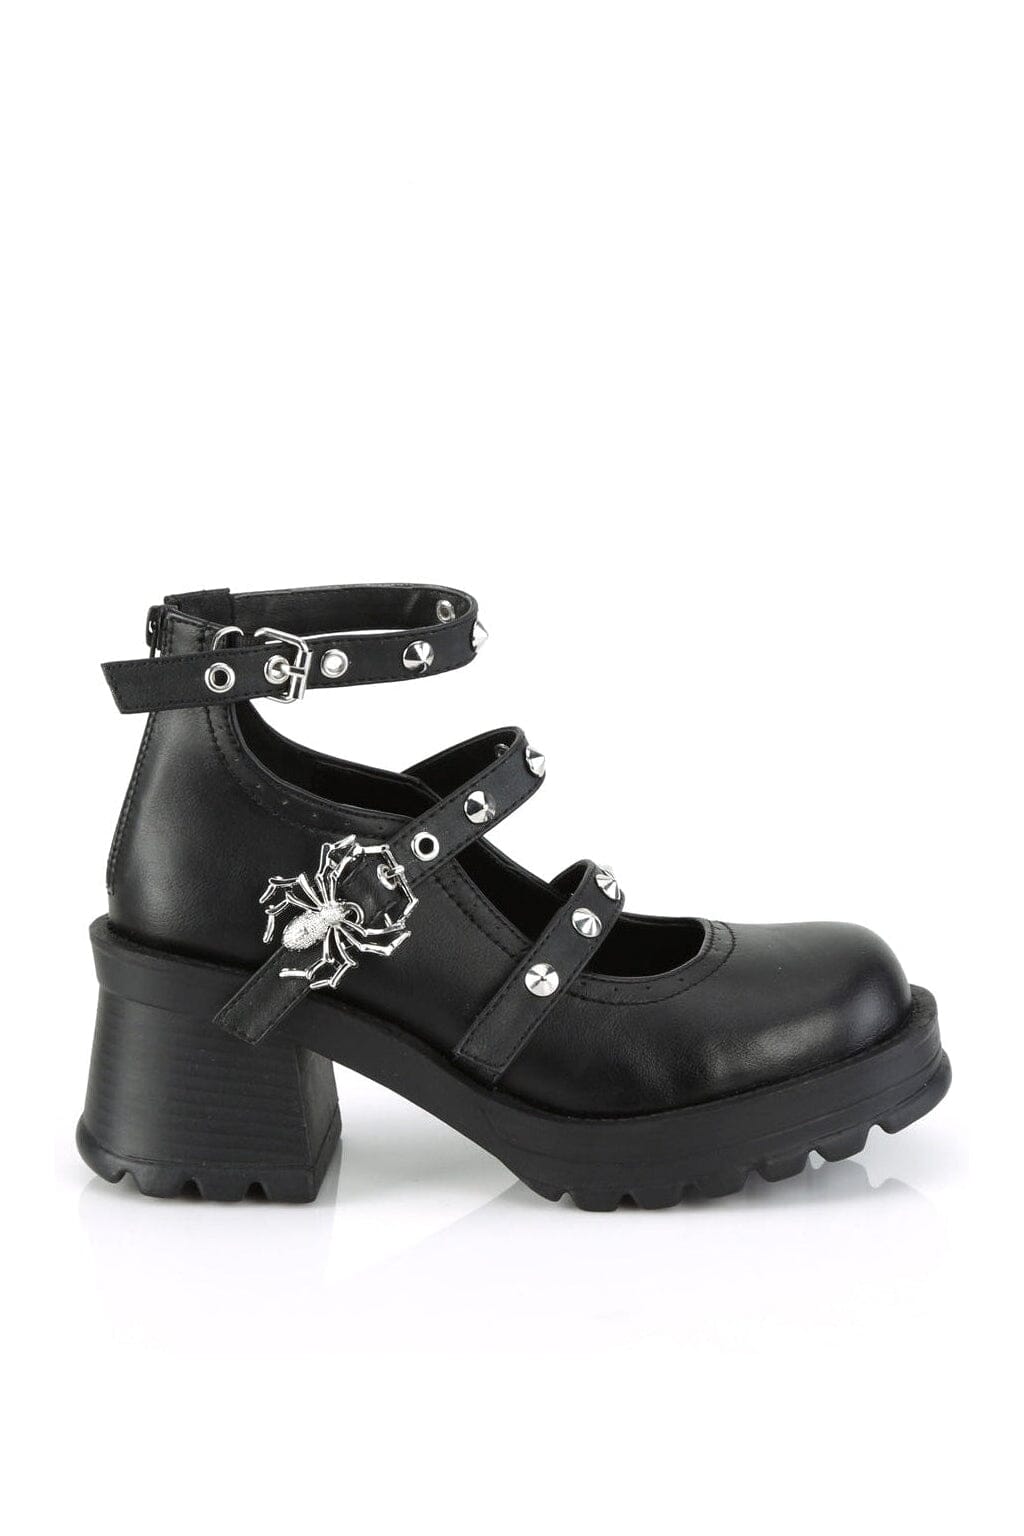 BRATTY-30 Black Vegan Leather Ankle Shoe-Ankle Shoe-Demonia-SEXYSHOES.COM